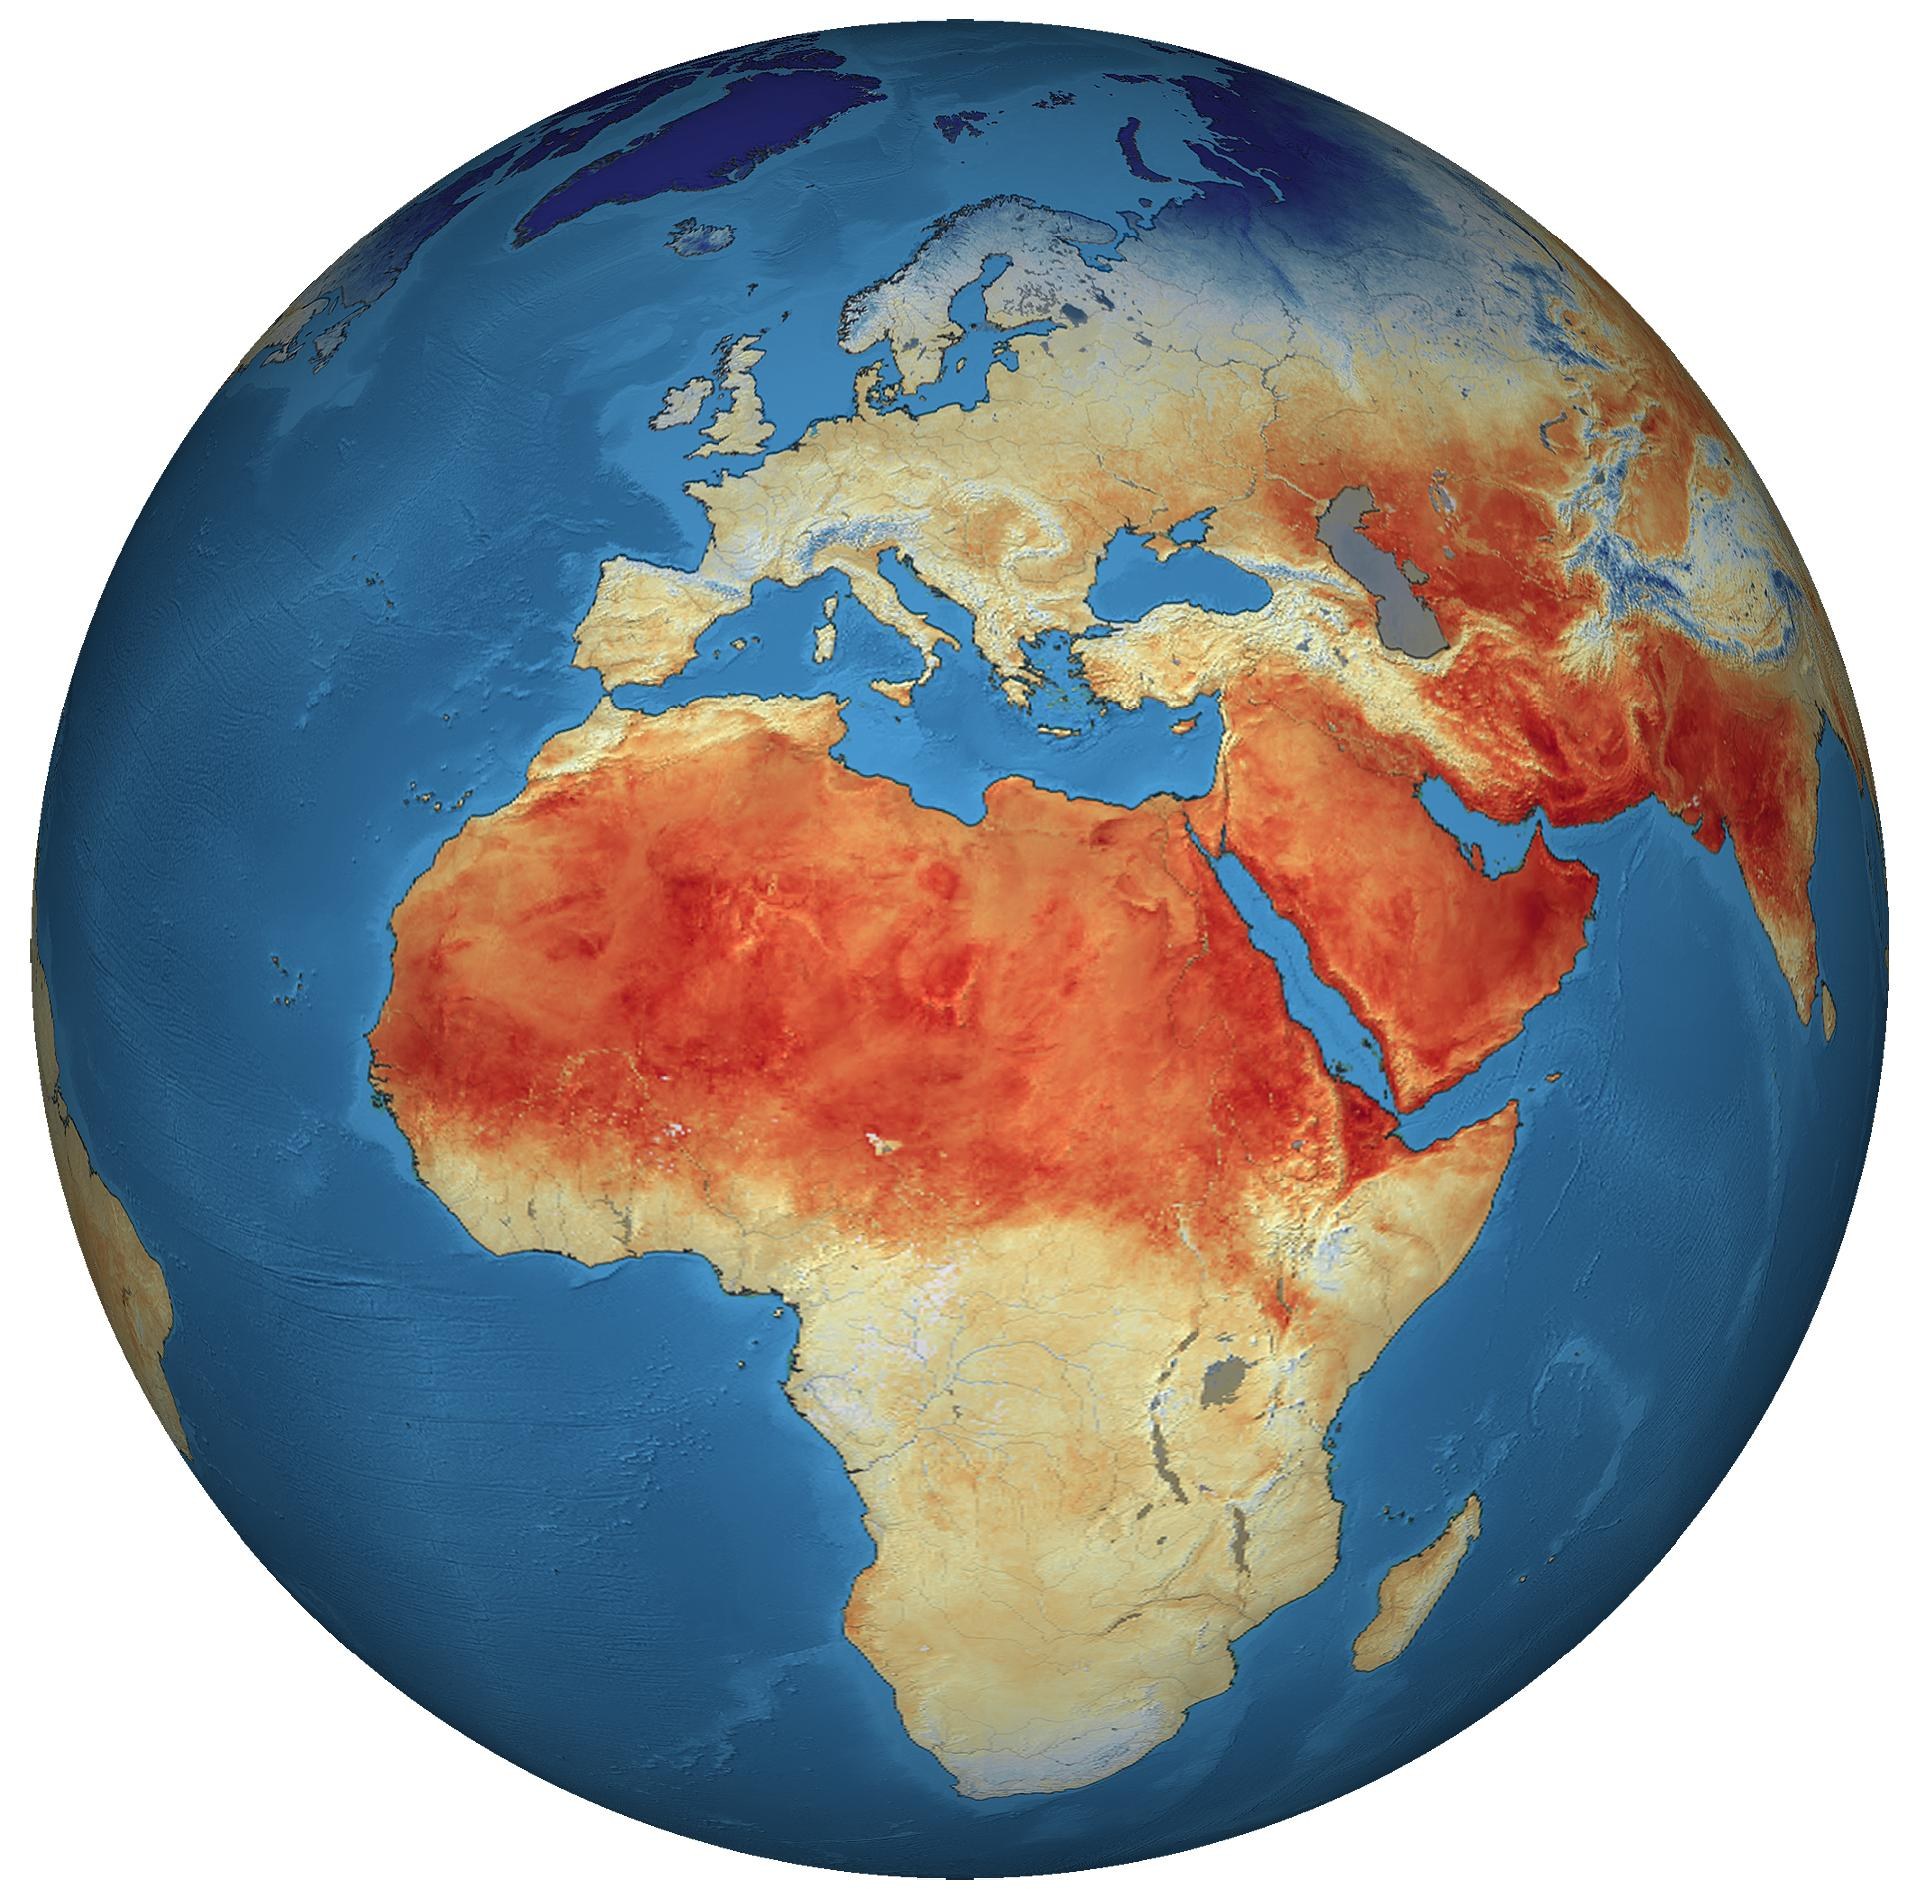 Global land mass surface temperatures